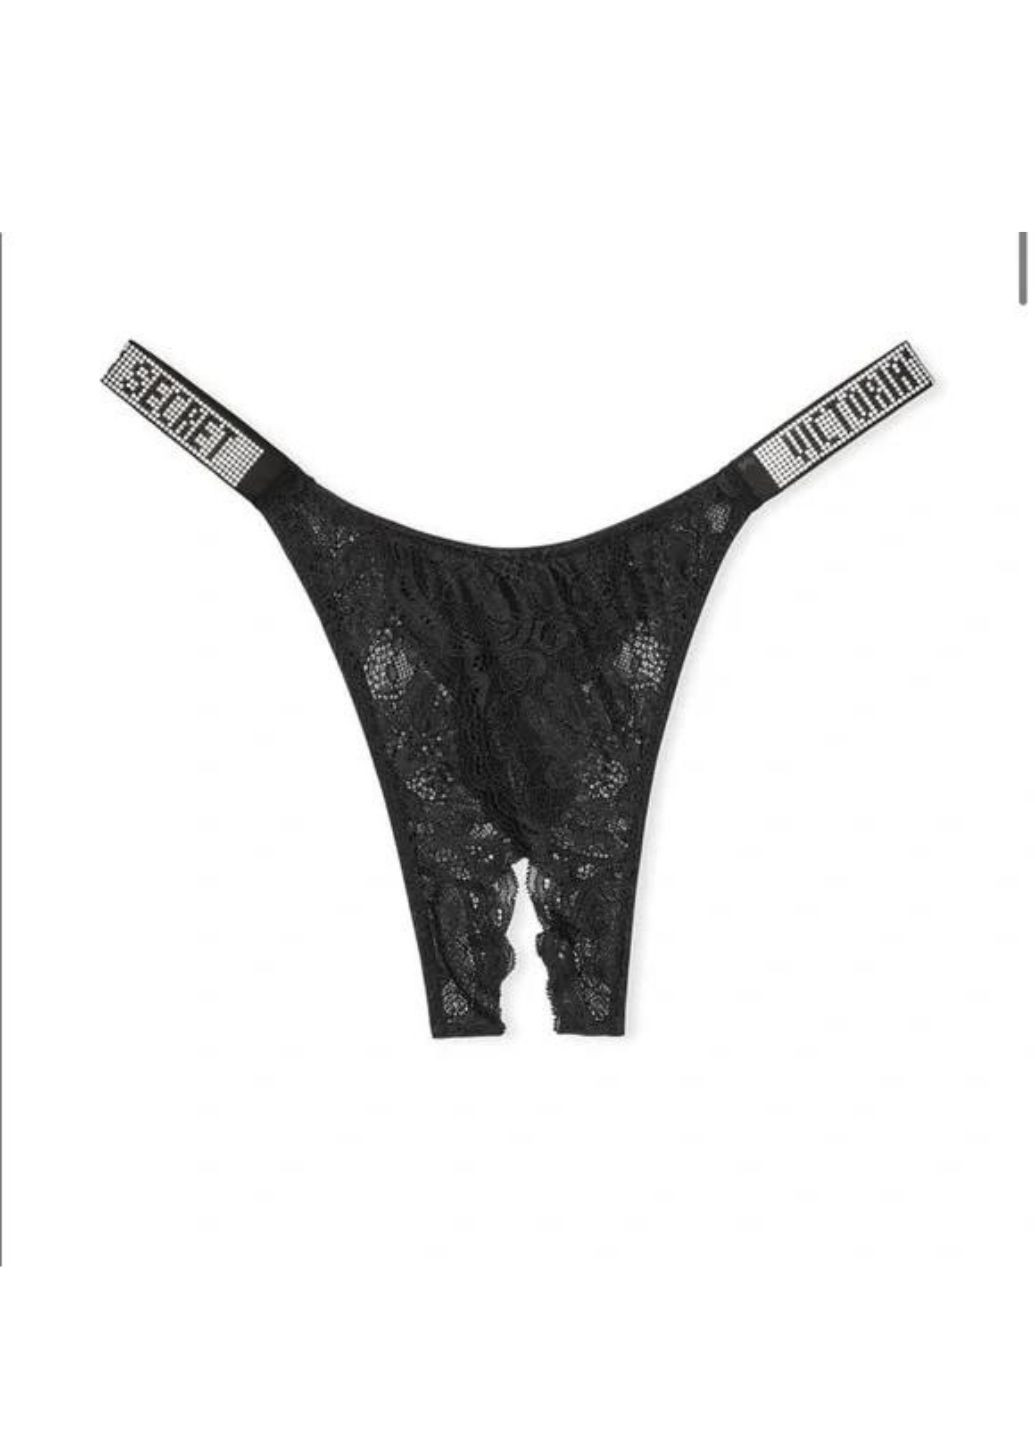 Трусики со стразами на поясе и сексульным вырезом Victoria's Secret bombshell shine strap brazilian crotchless panty (267723010)